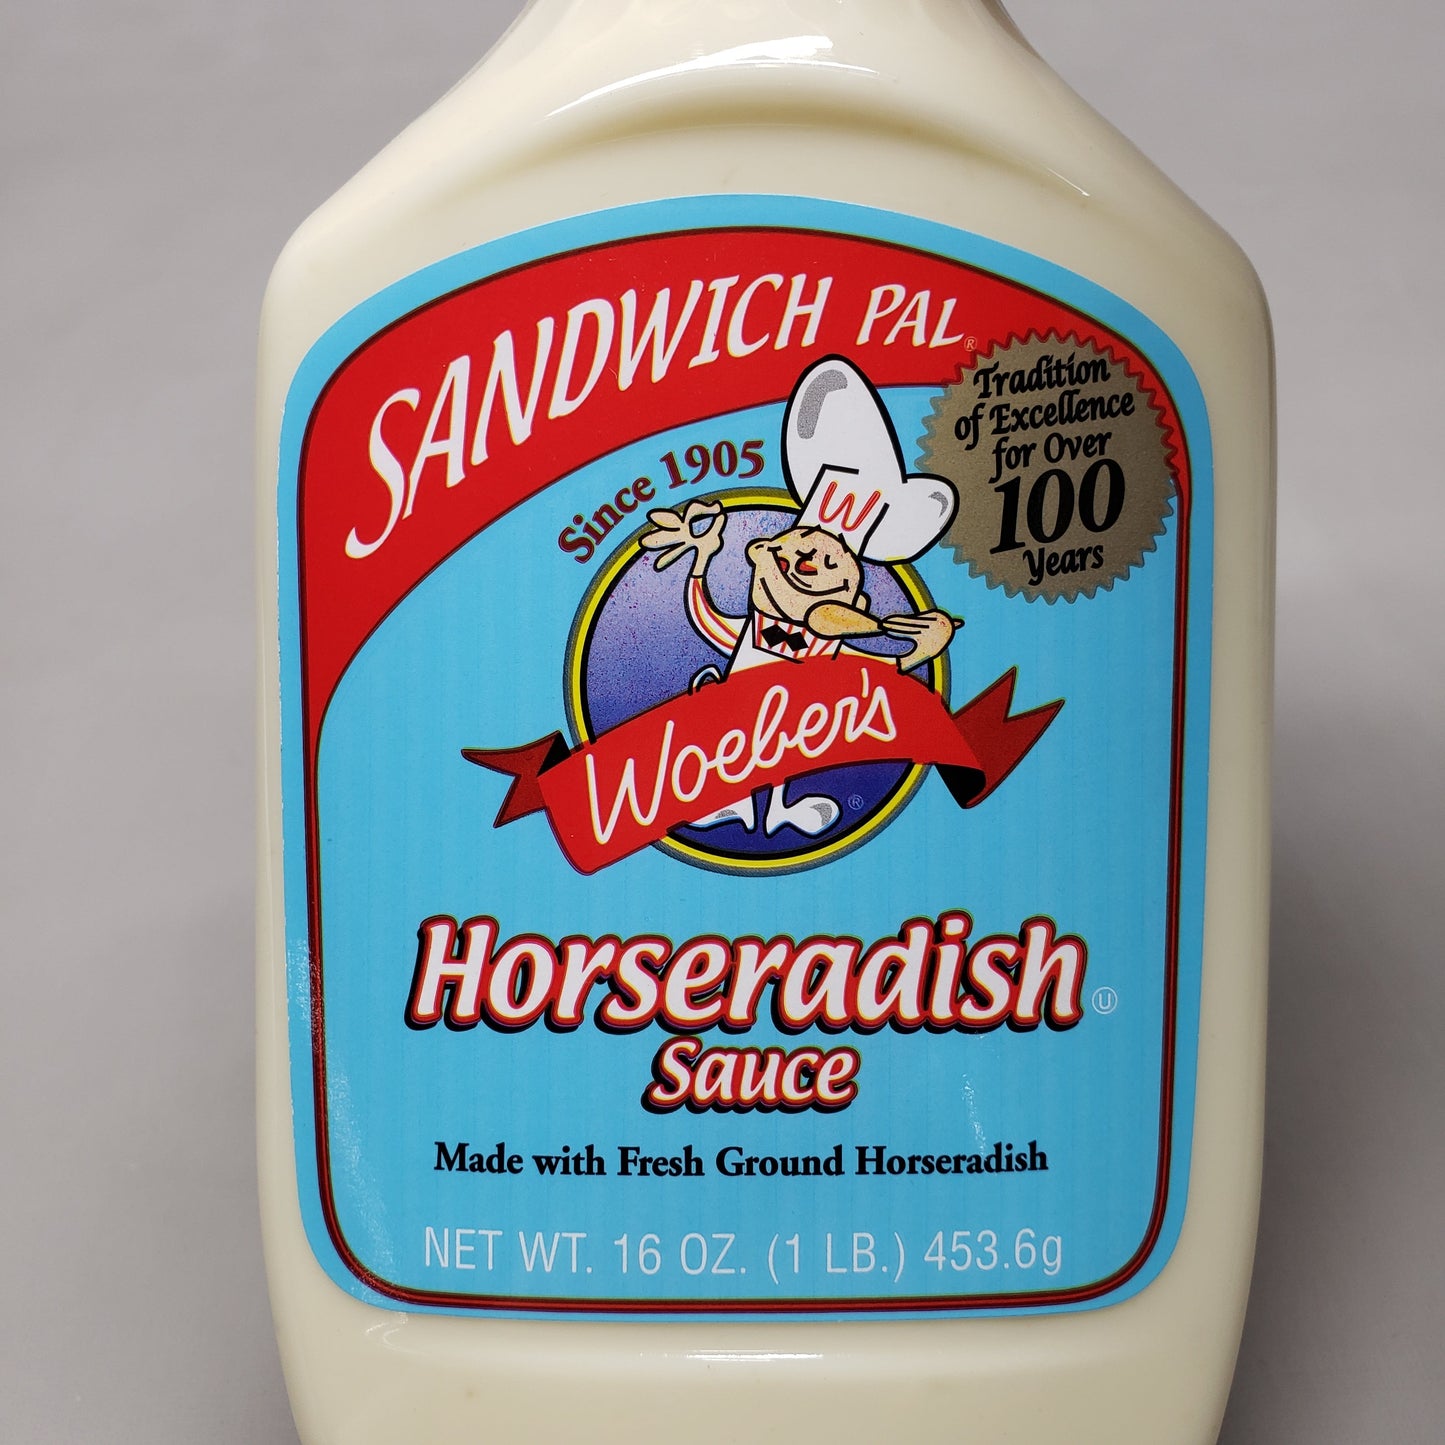 ZA@ WOEBER'S (24 PACK) Sandwich Pal Horseradish Sauce 6/16 oz 10/23 C